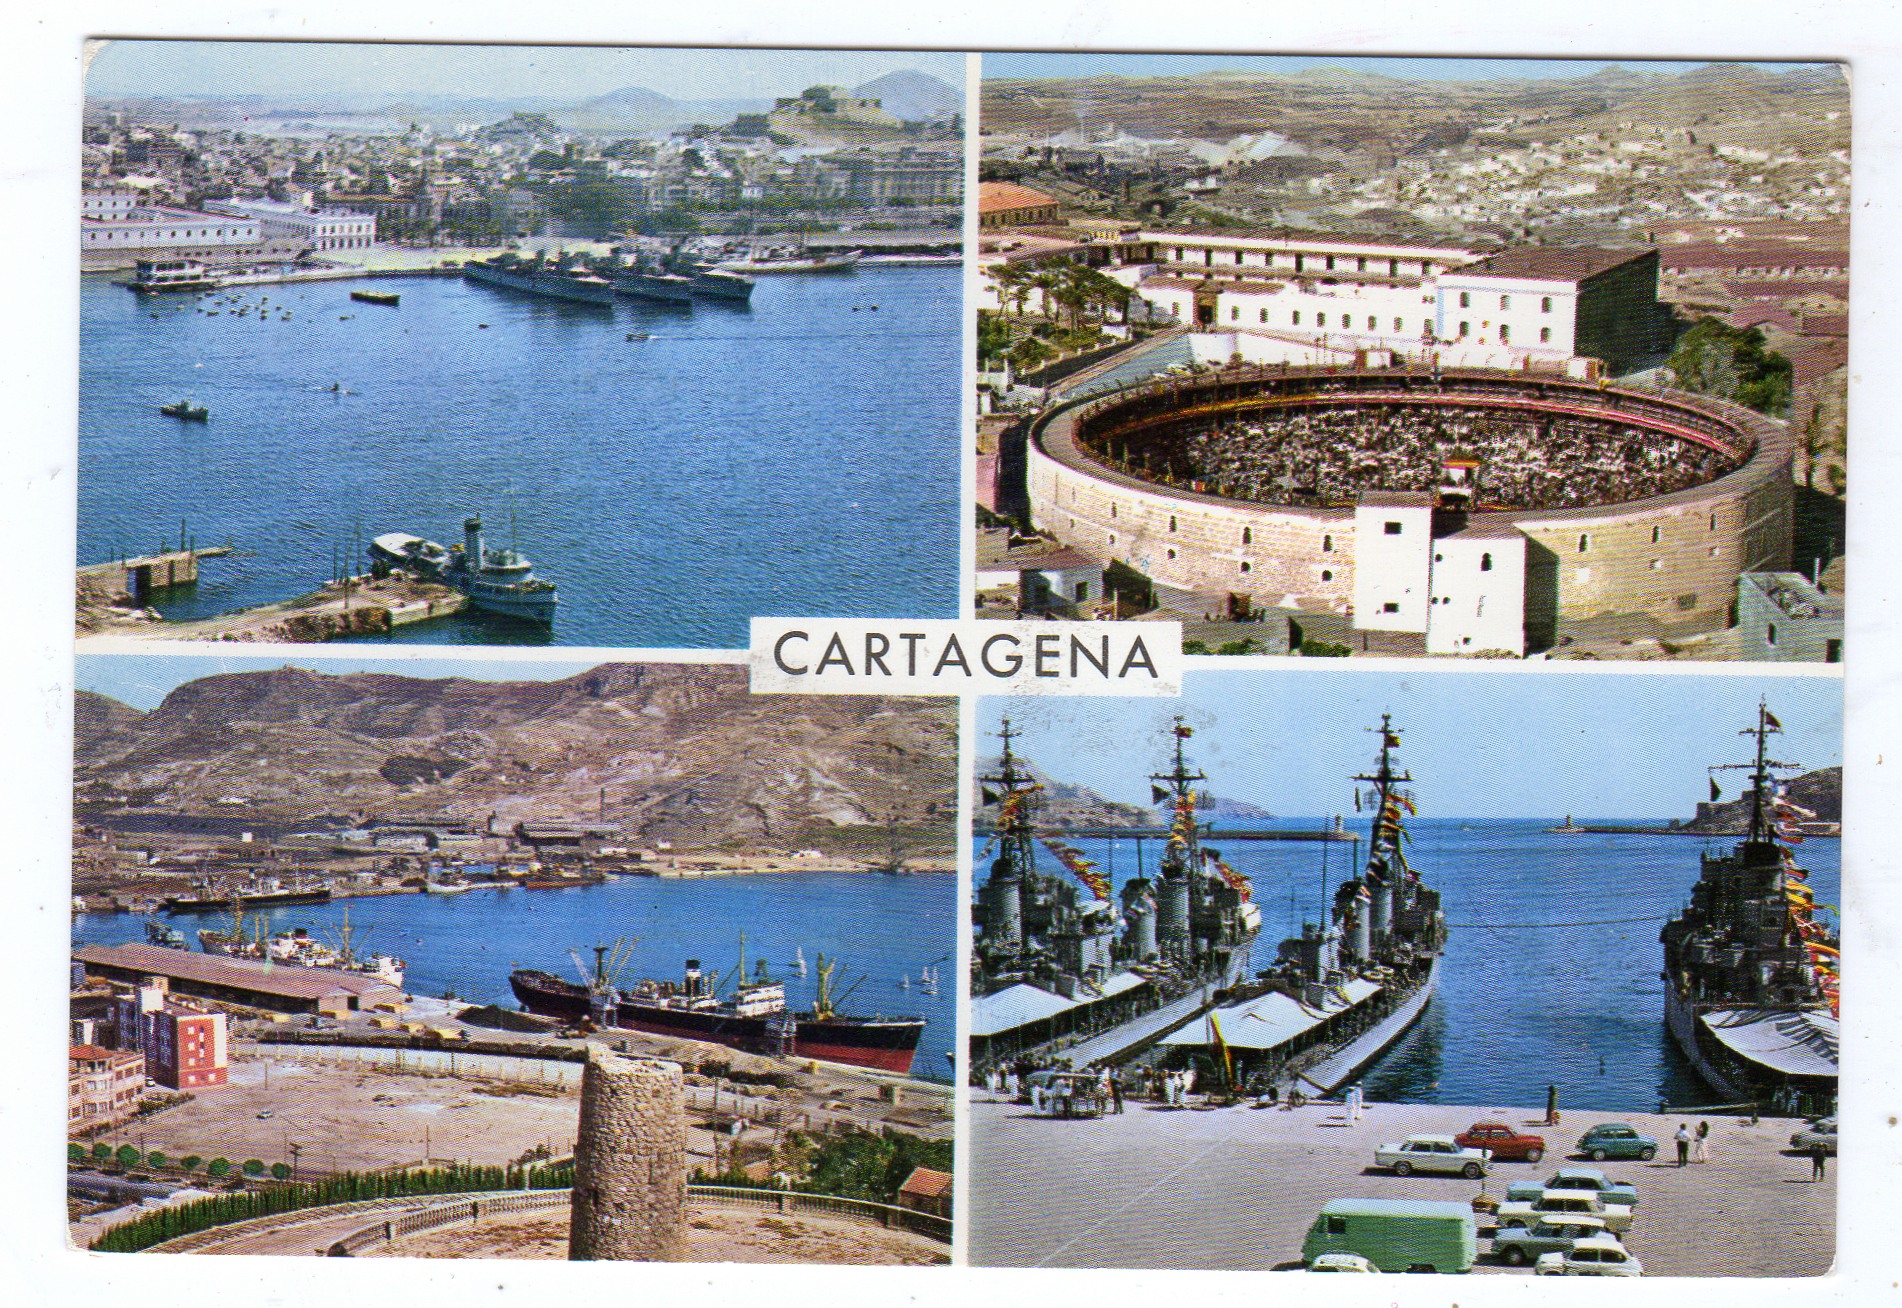 Cartagena garabella 32